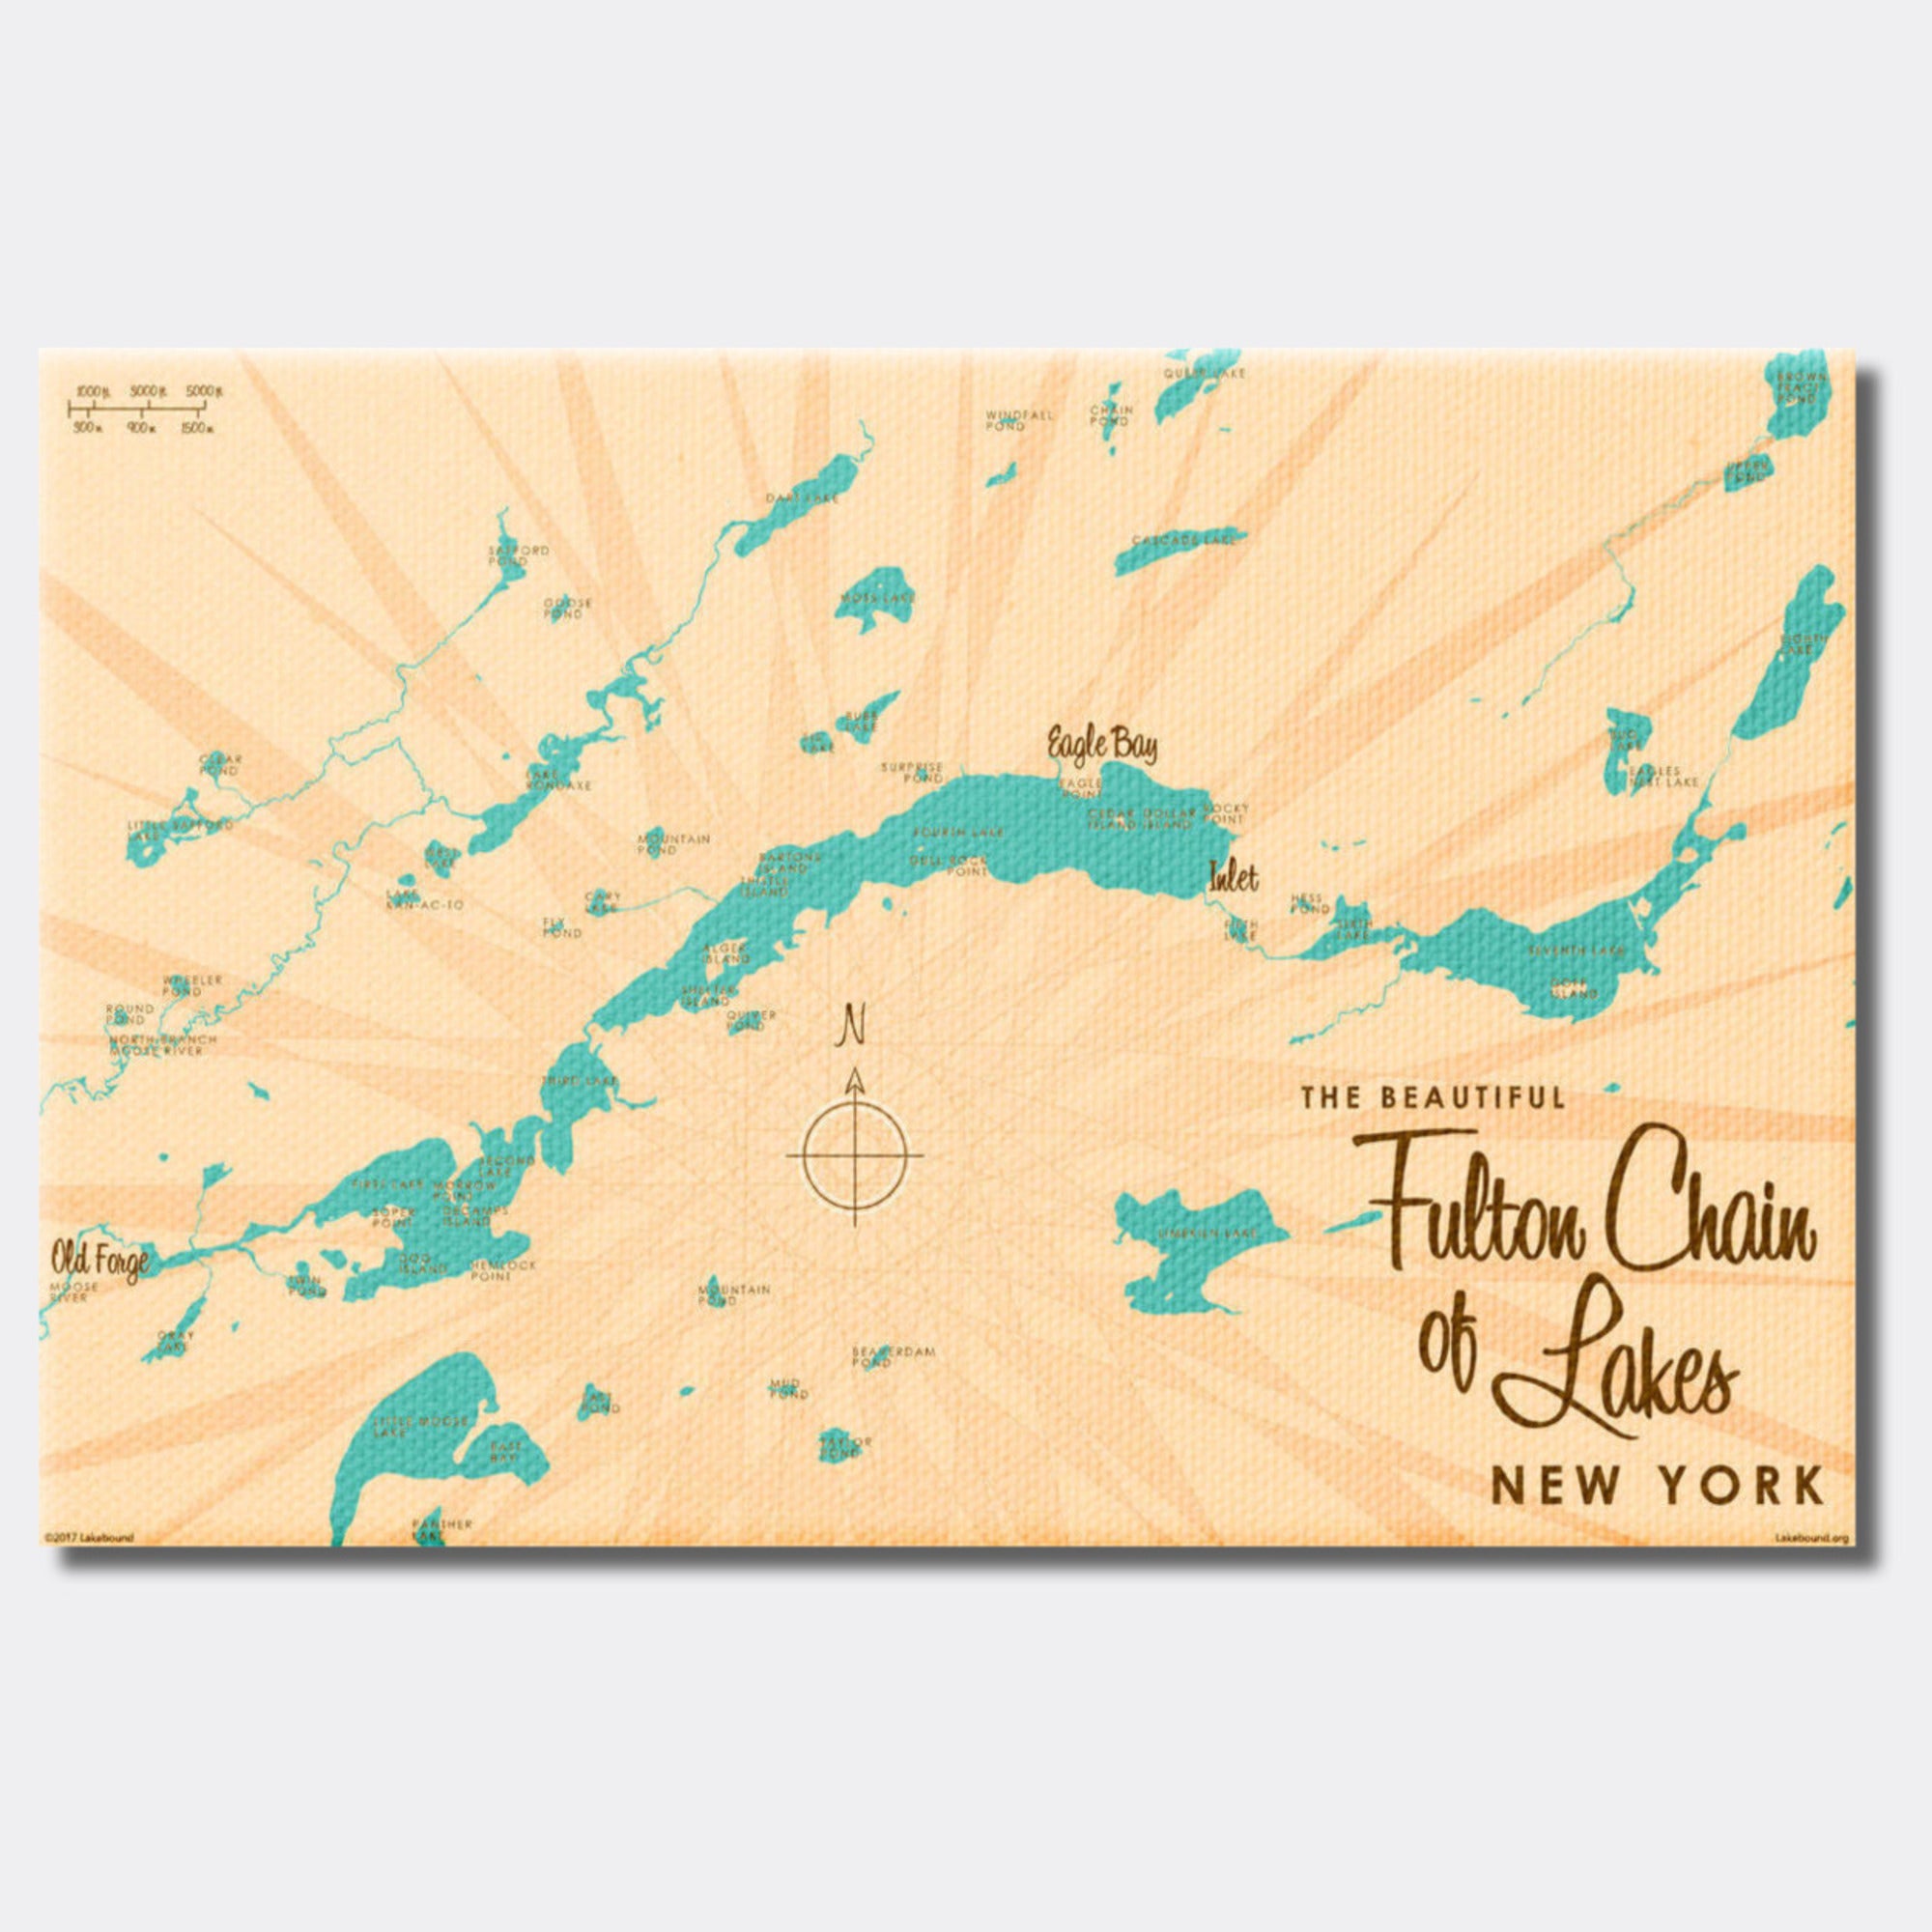 Fulton Chain of Lakes New York, Canvas Print